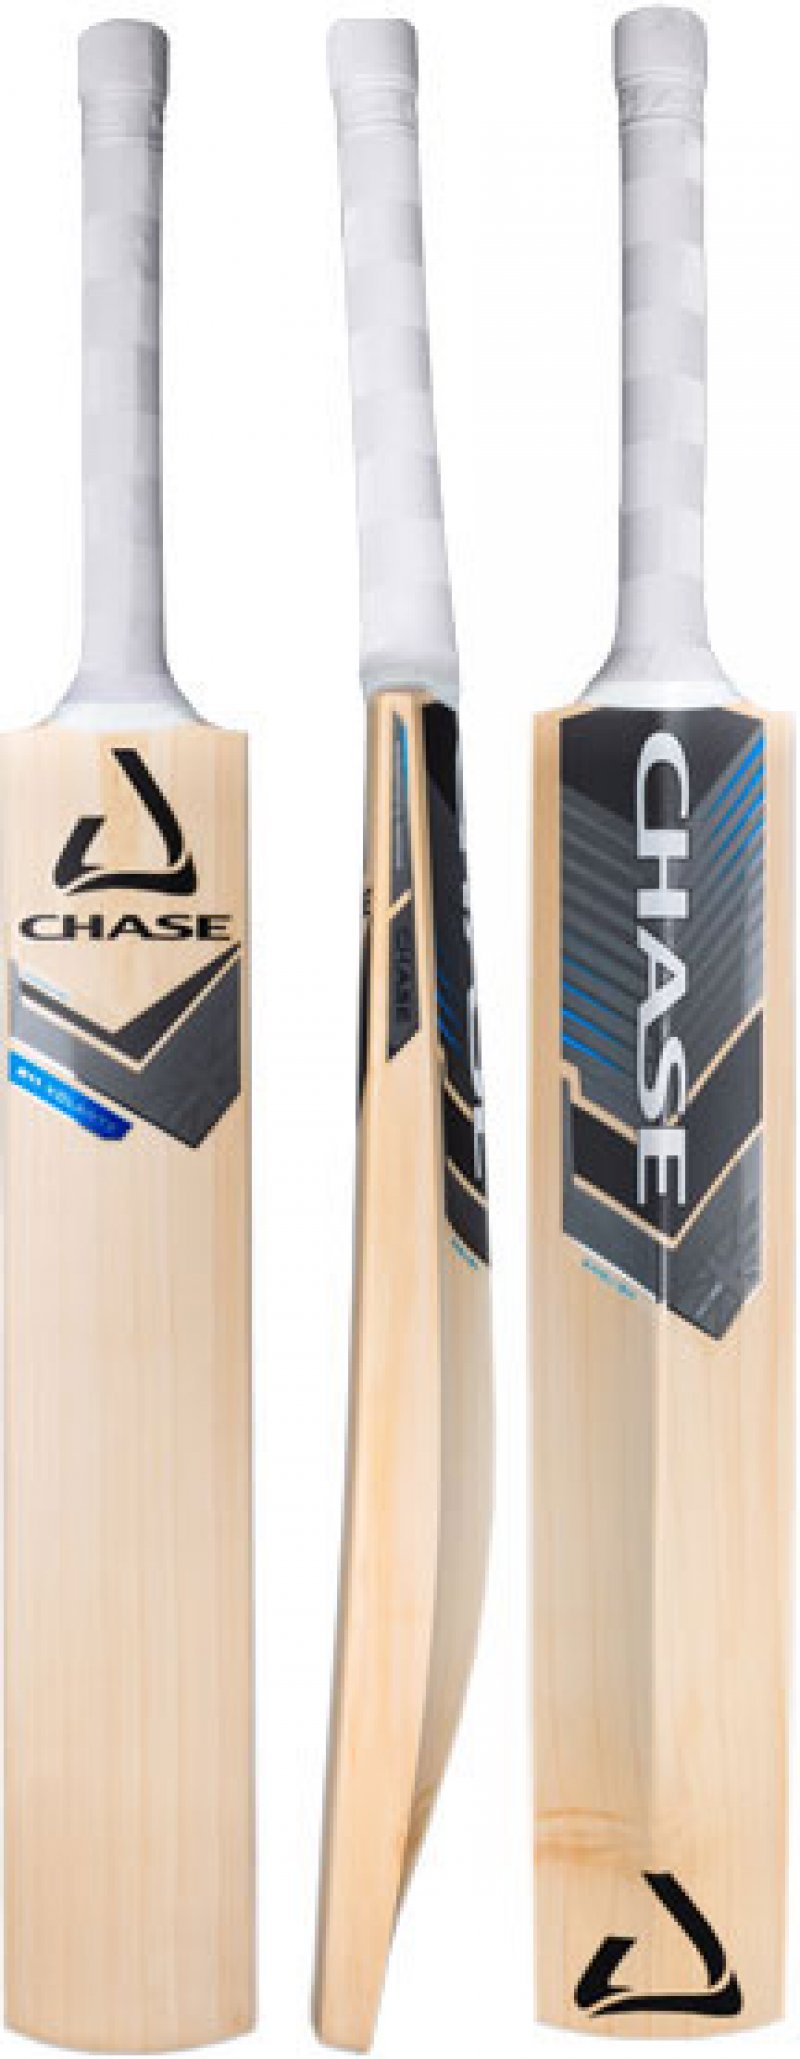 Chase Volante R4 Cricket Bat